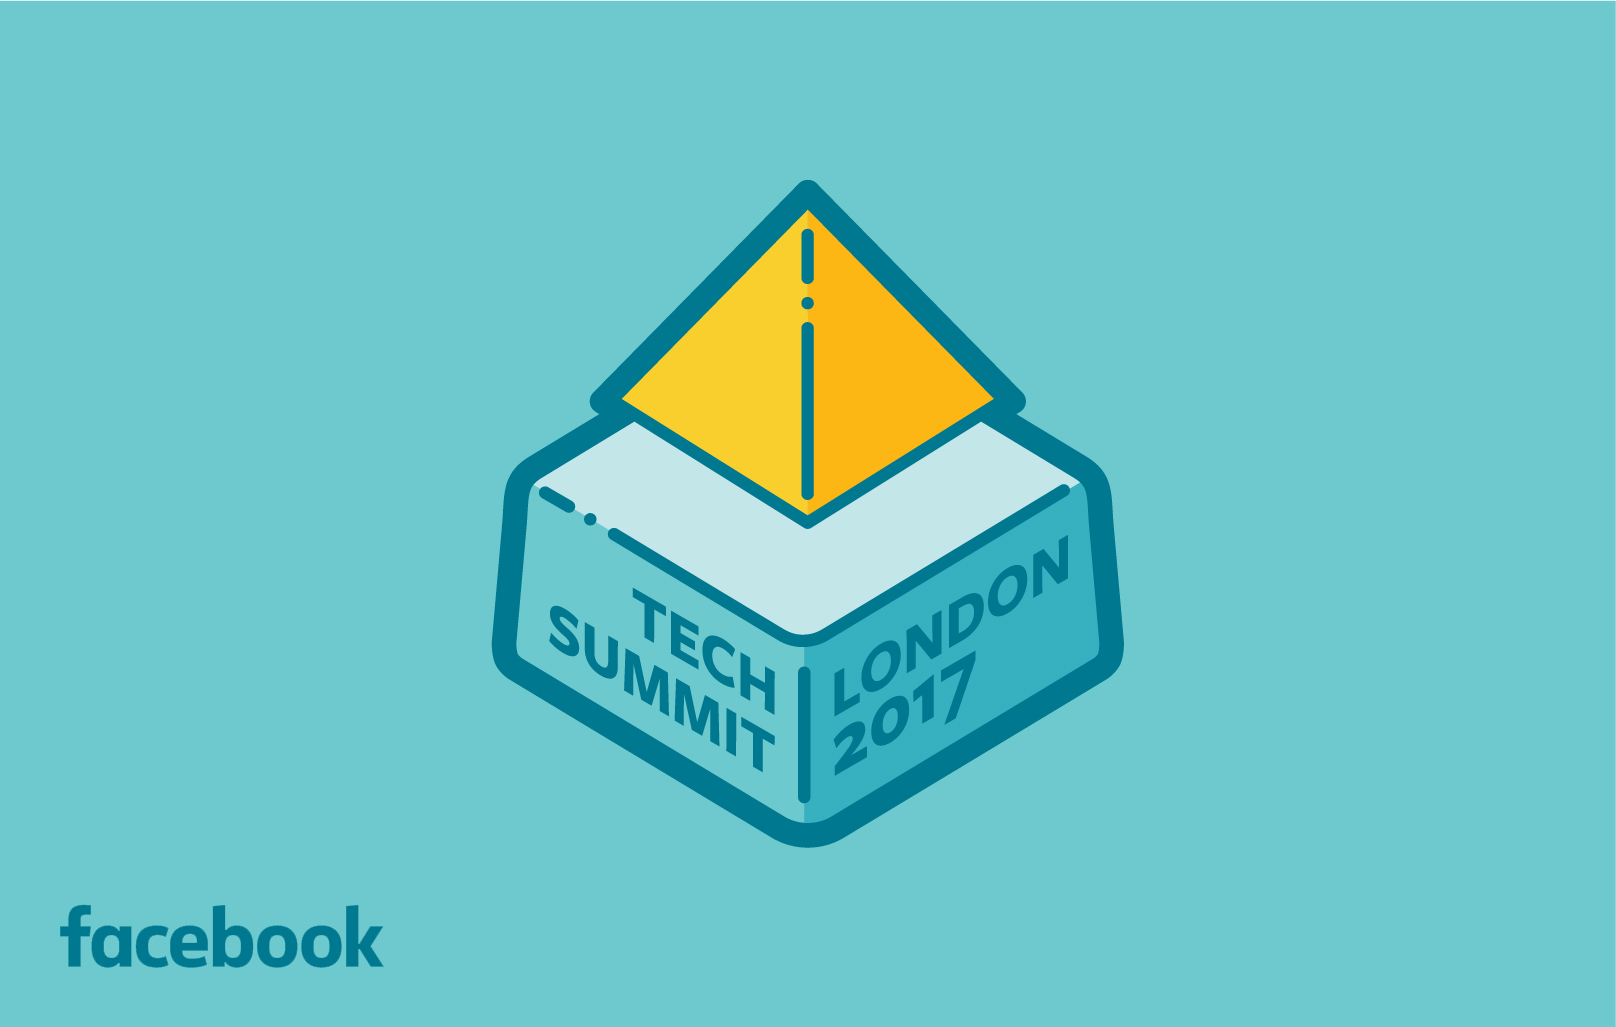 Facebook Tech Summit London